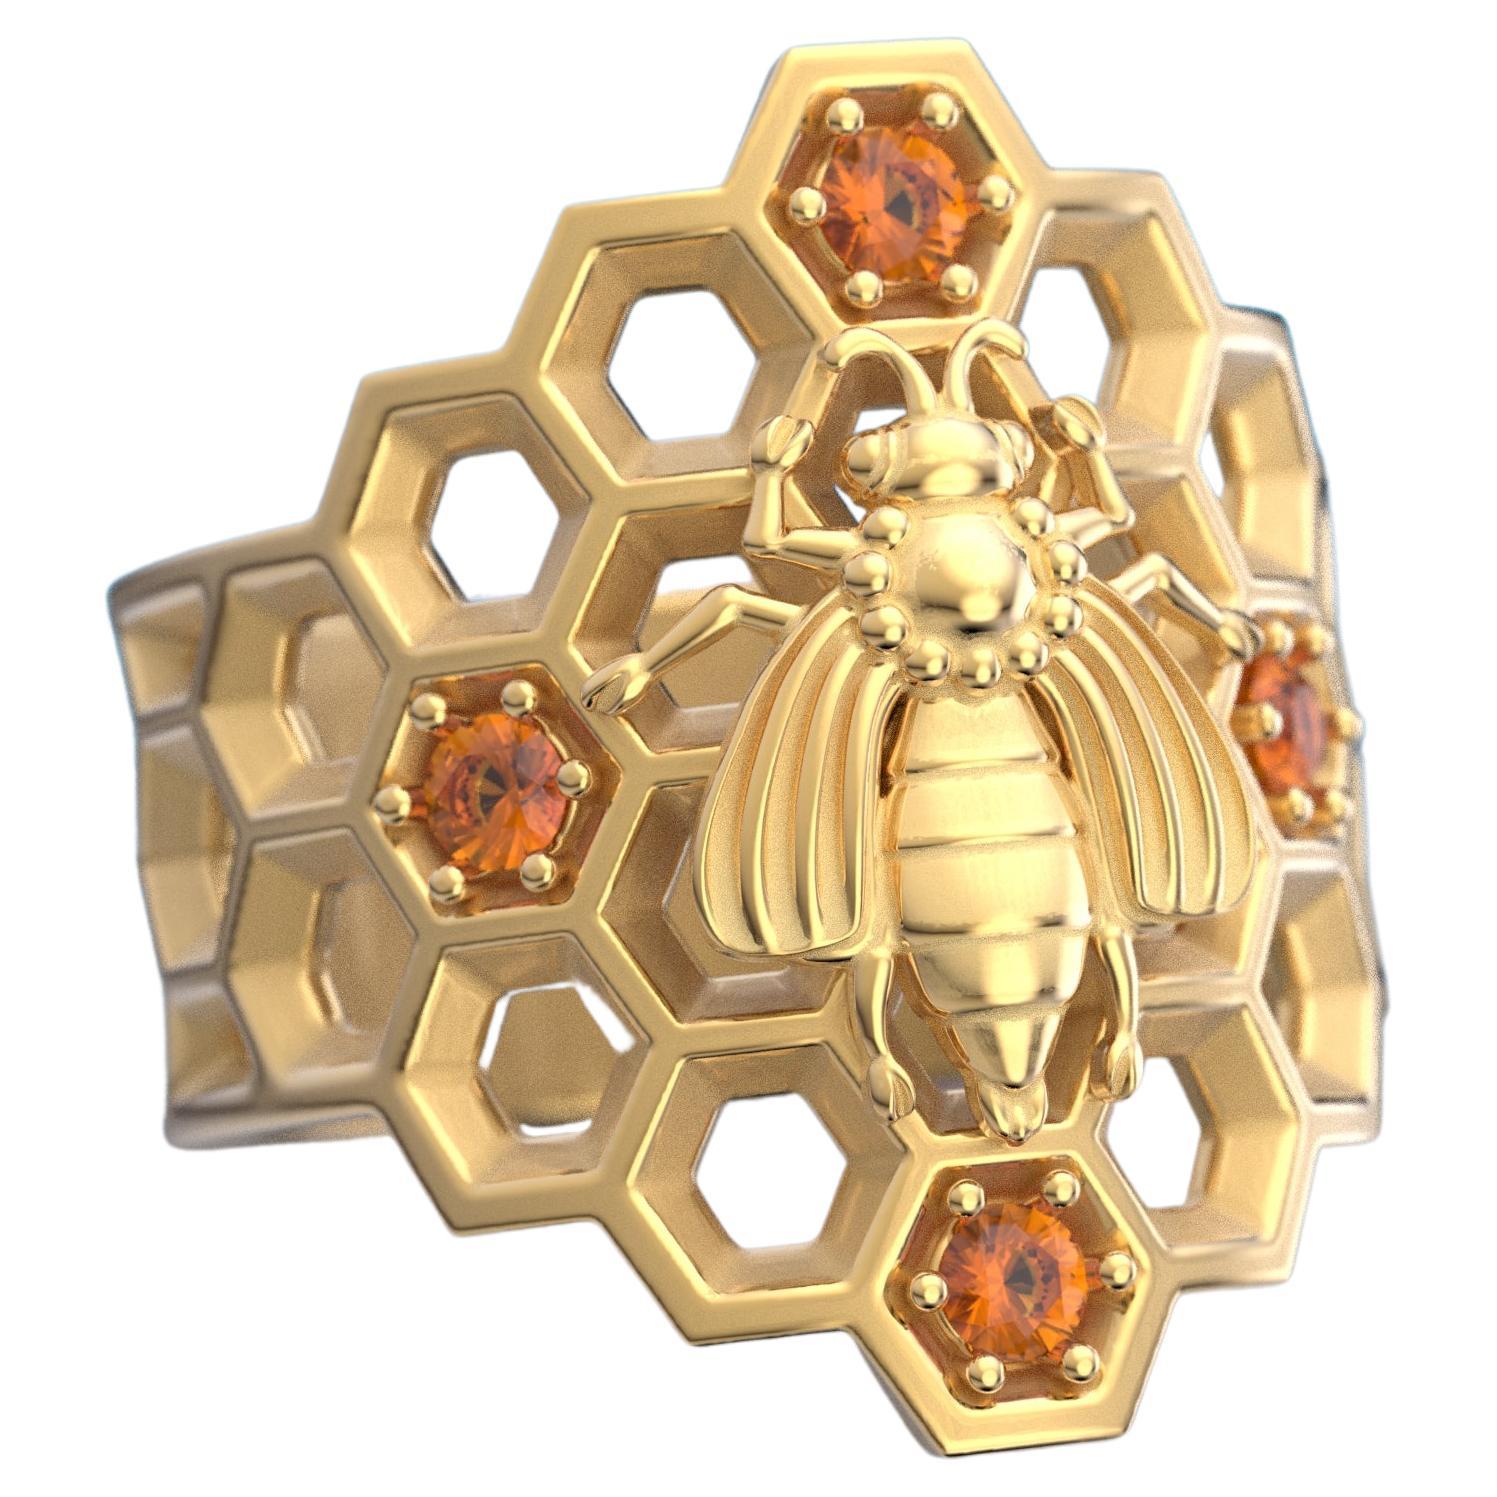 For Sale:   Honeycomb Bee Ring in 18k Solid Gold with natural Orange Spessartite Garnet